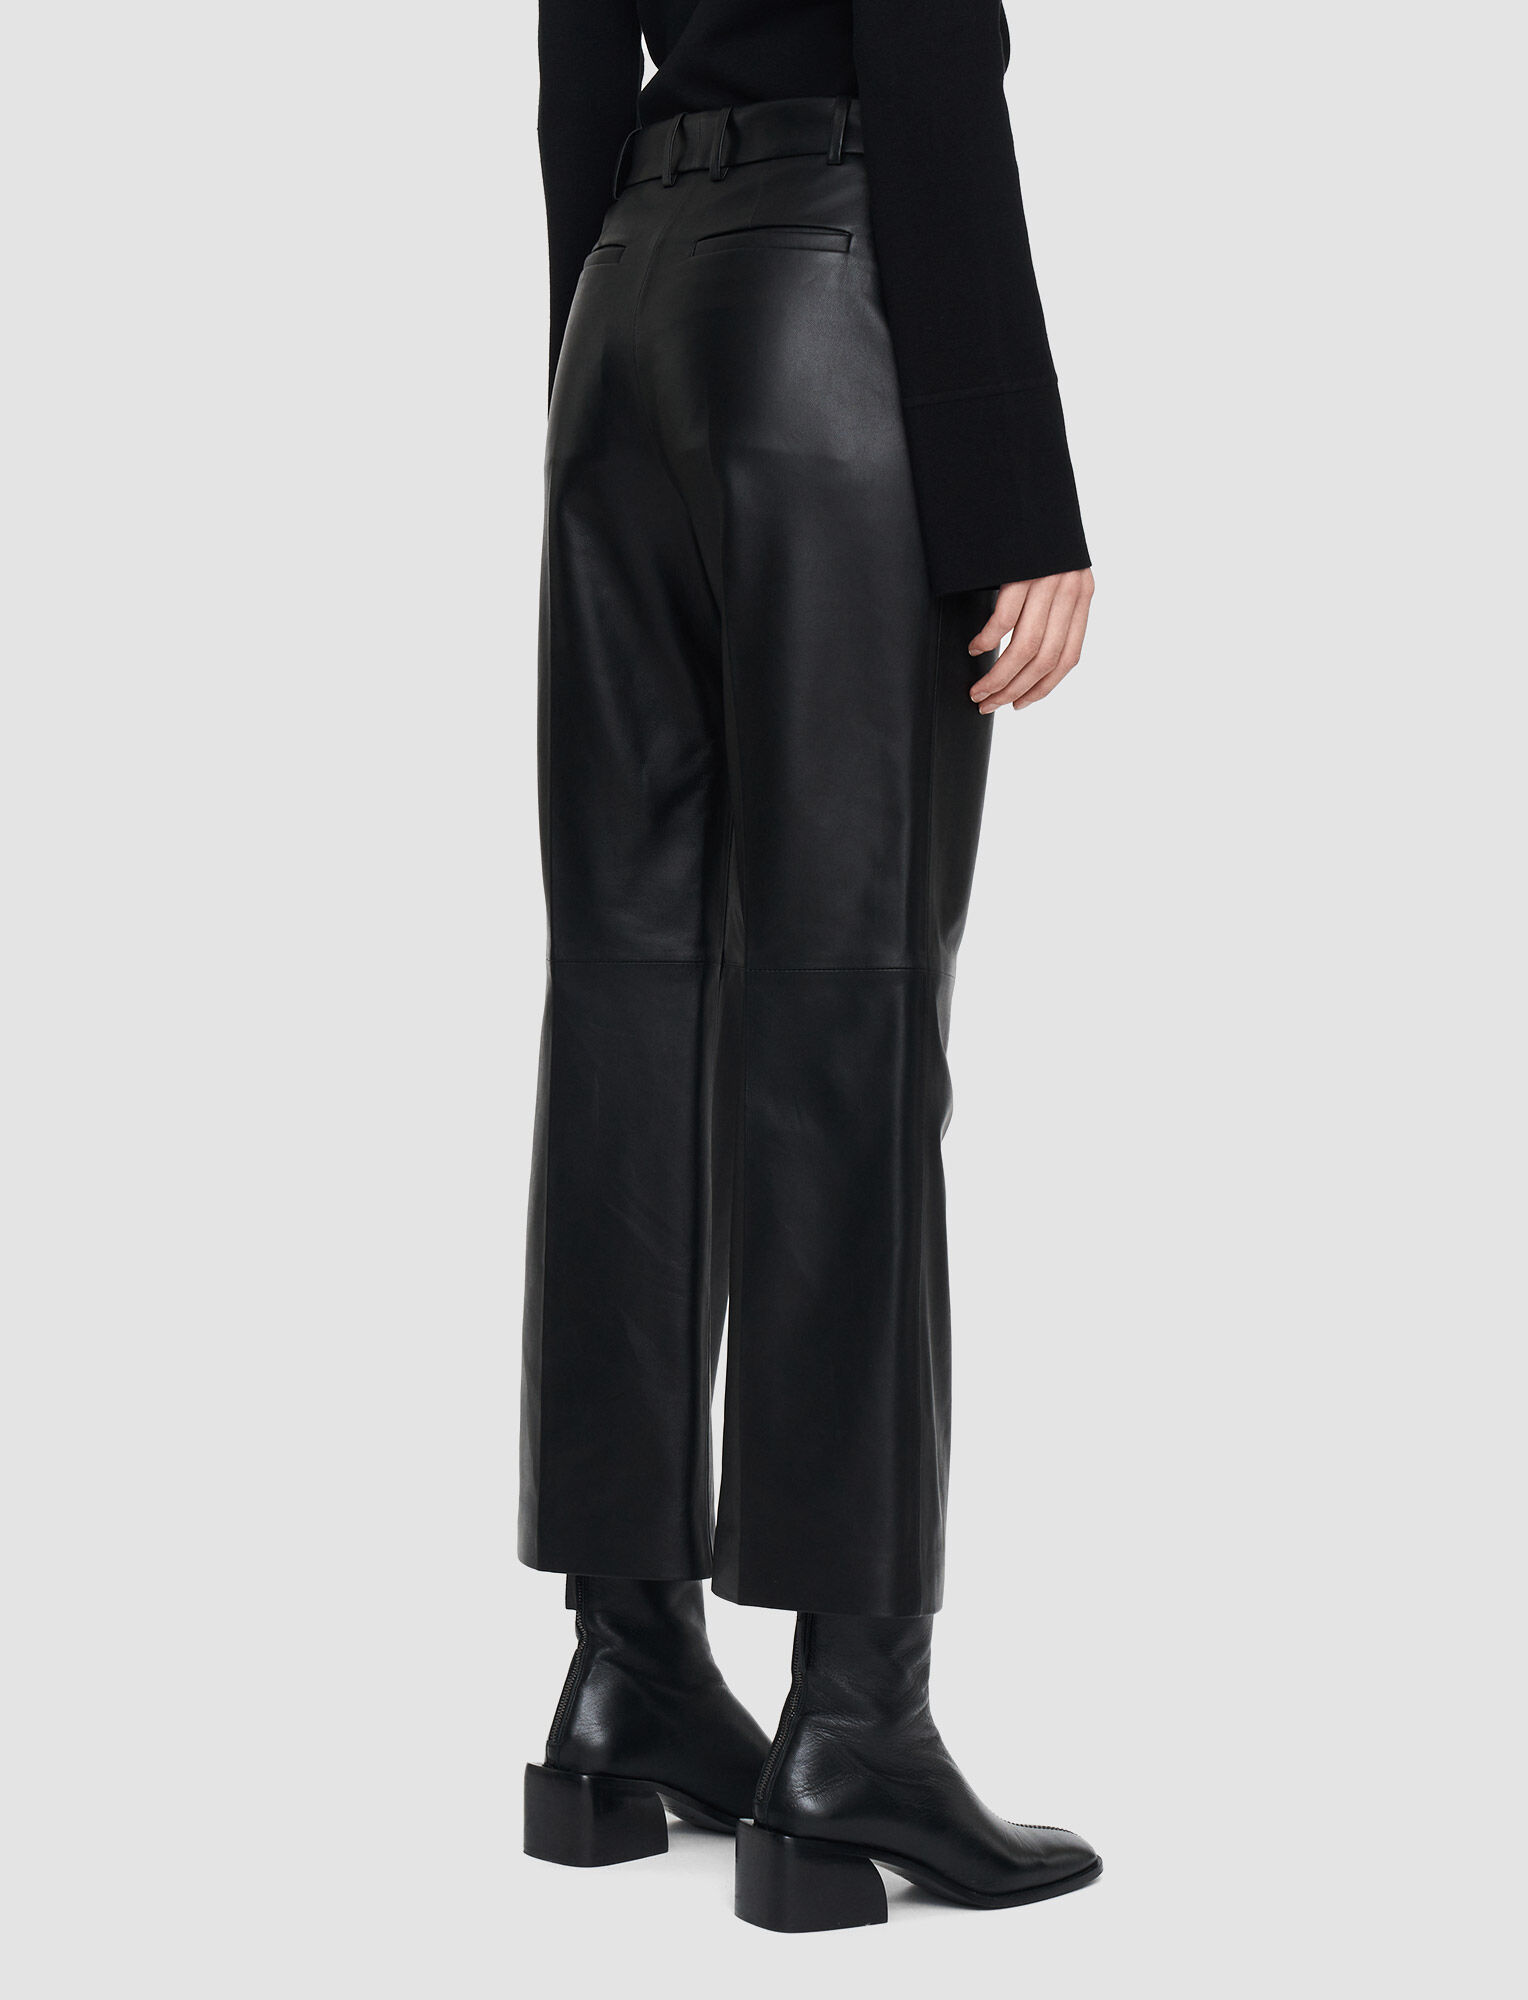 Joseph, Nappa Leather Talia Trousers, in Black